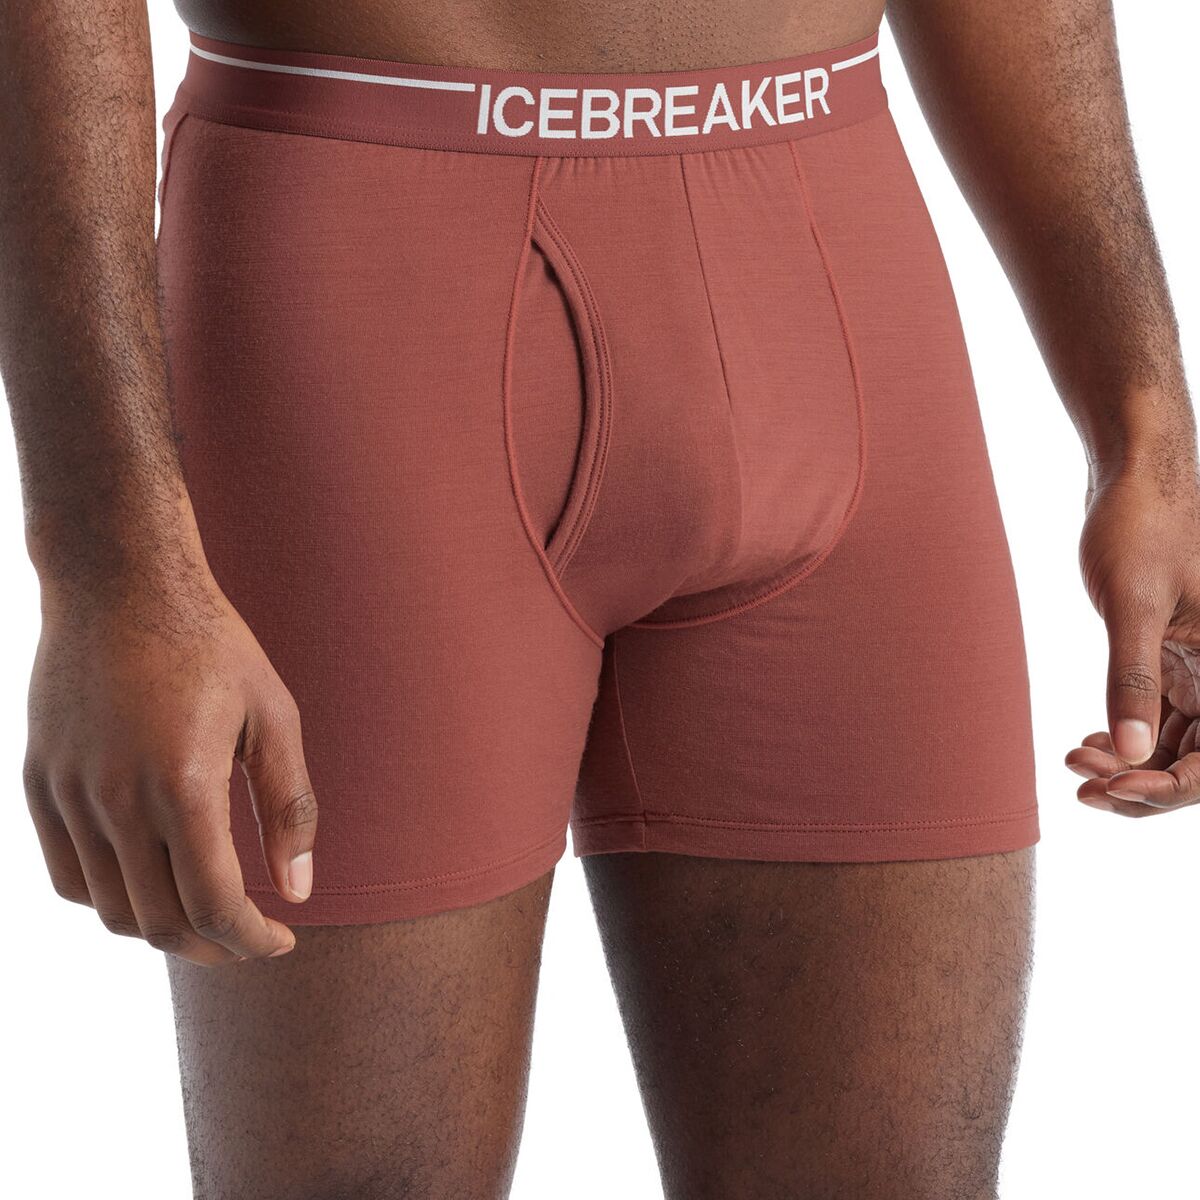 Icebreaker Anatomica Boxer + Fly - Men's - Clothing